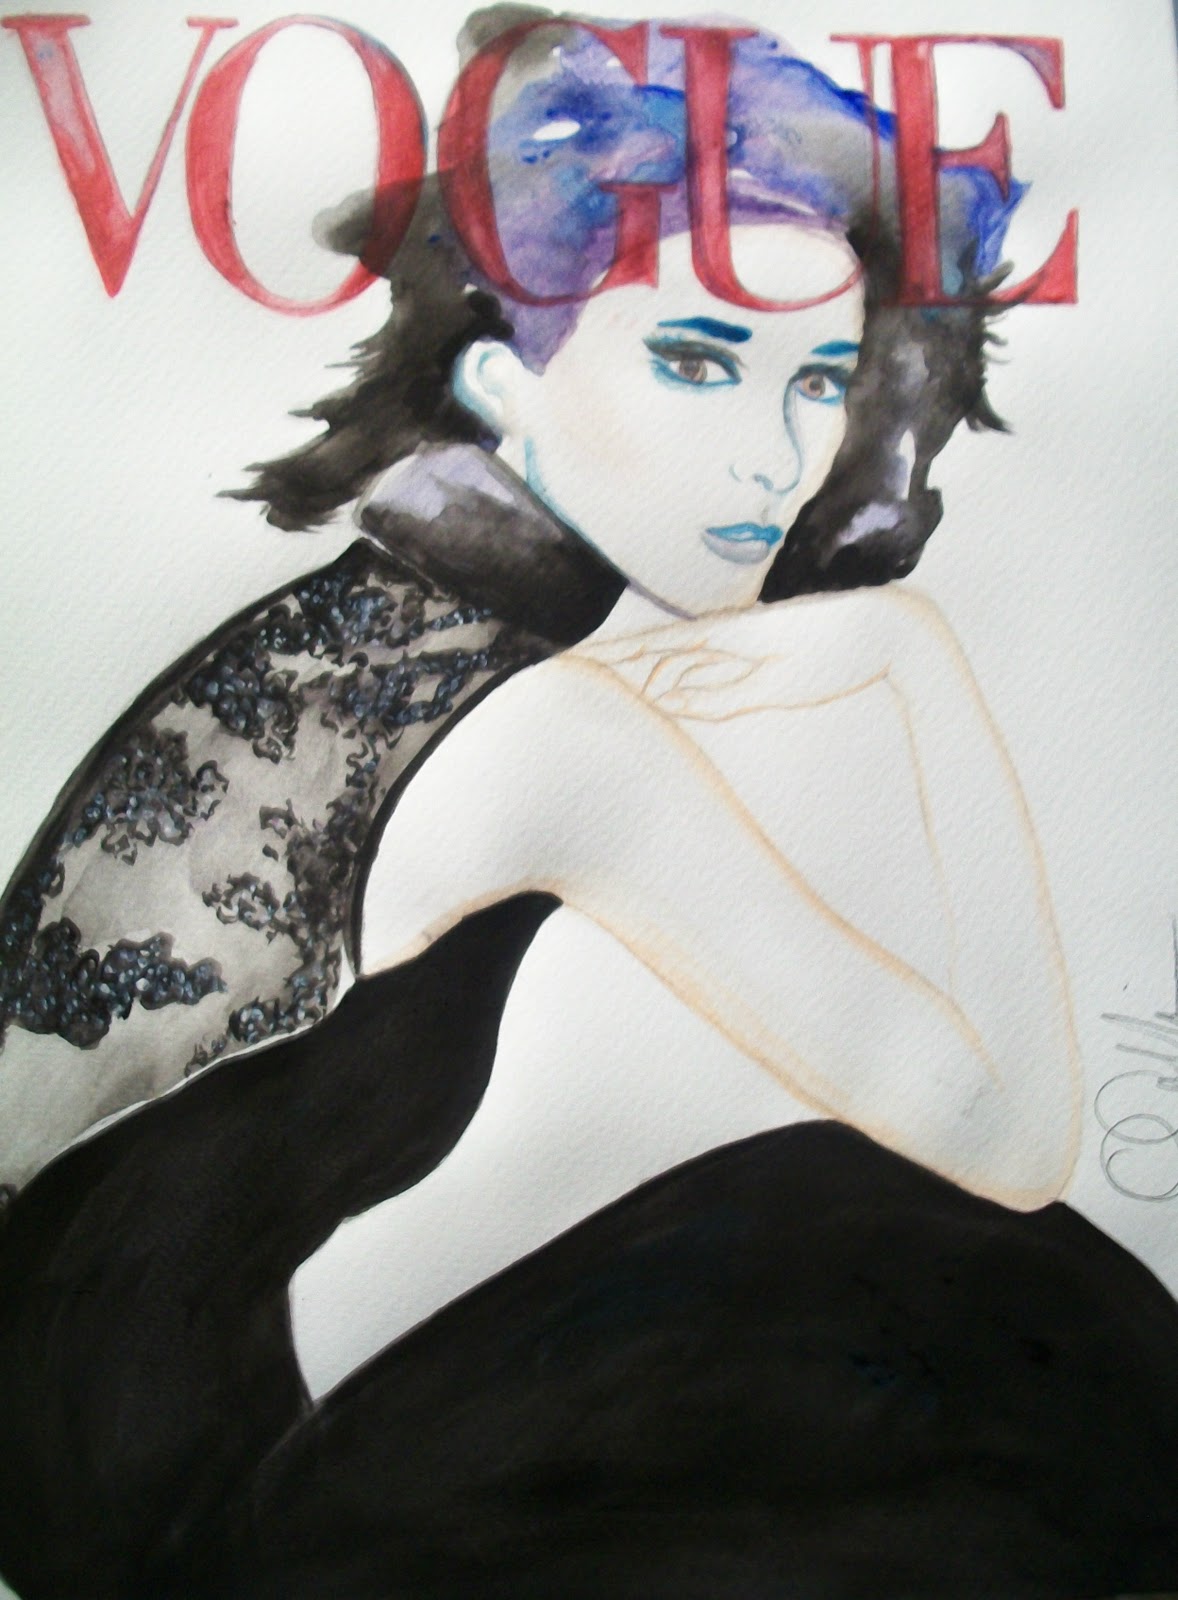 Vogue Cover Illustration (Watercolor)